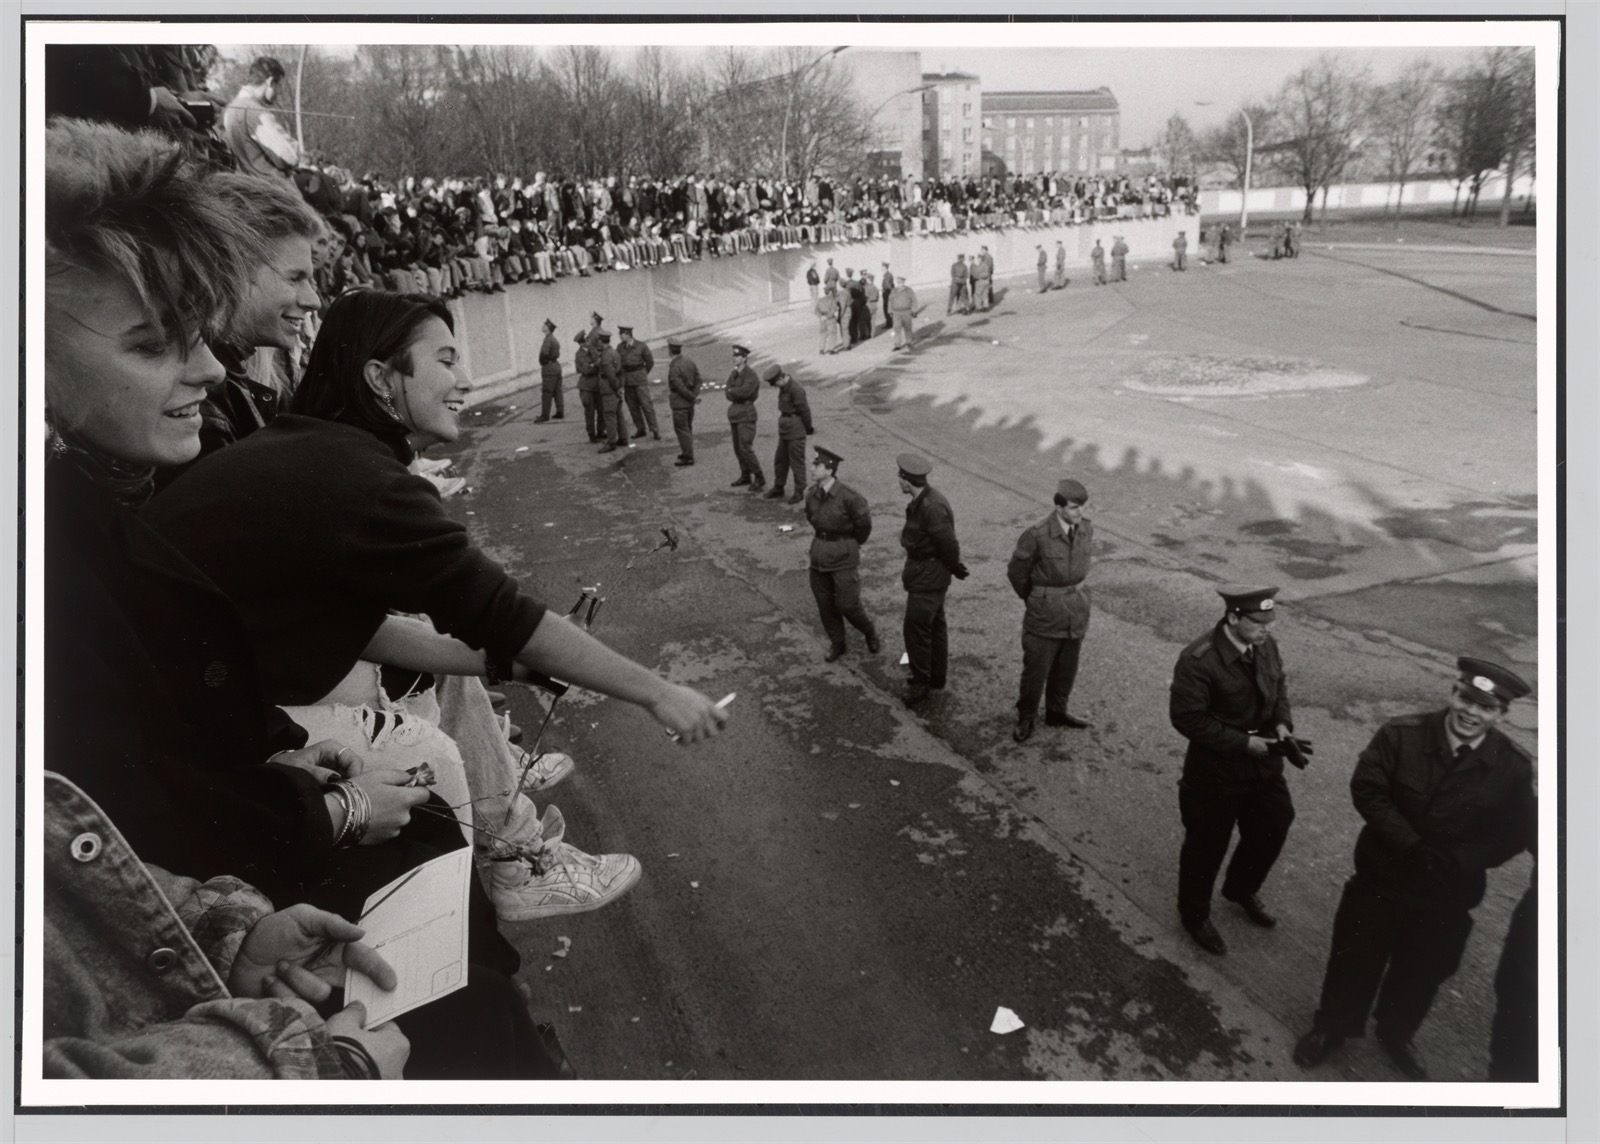 Barbara Klemm. ”Fall der Mauer, Berlin, 10. November, 1989”. - Image 2 of 4